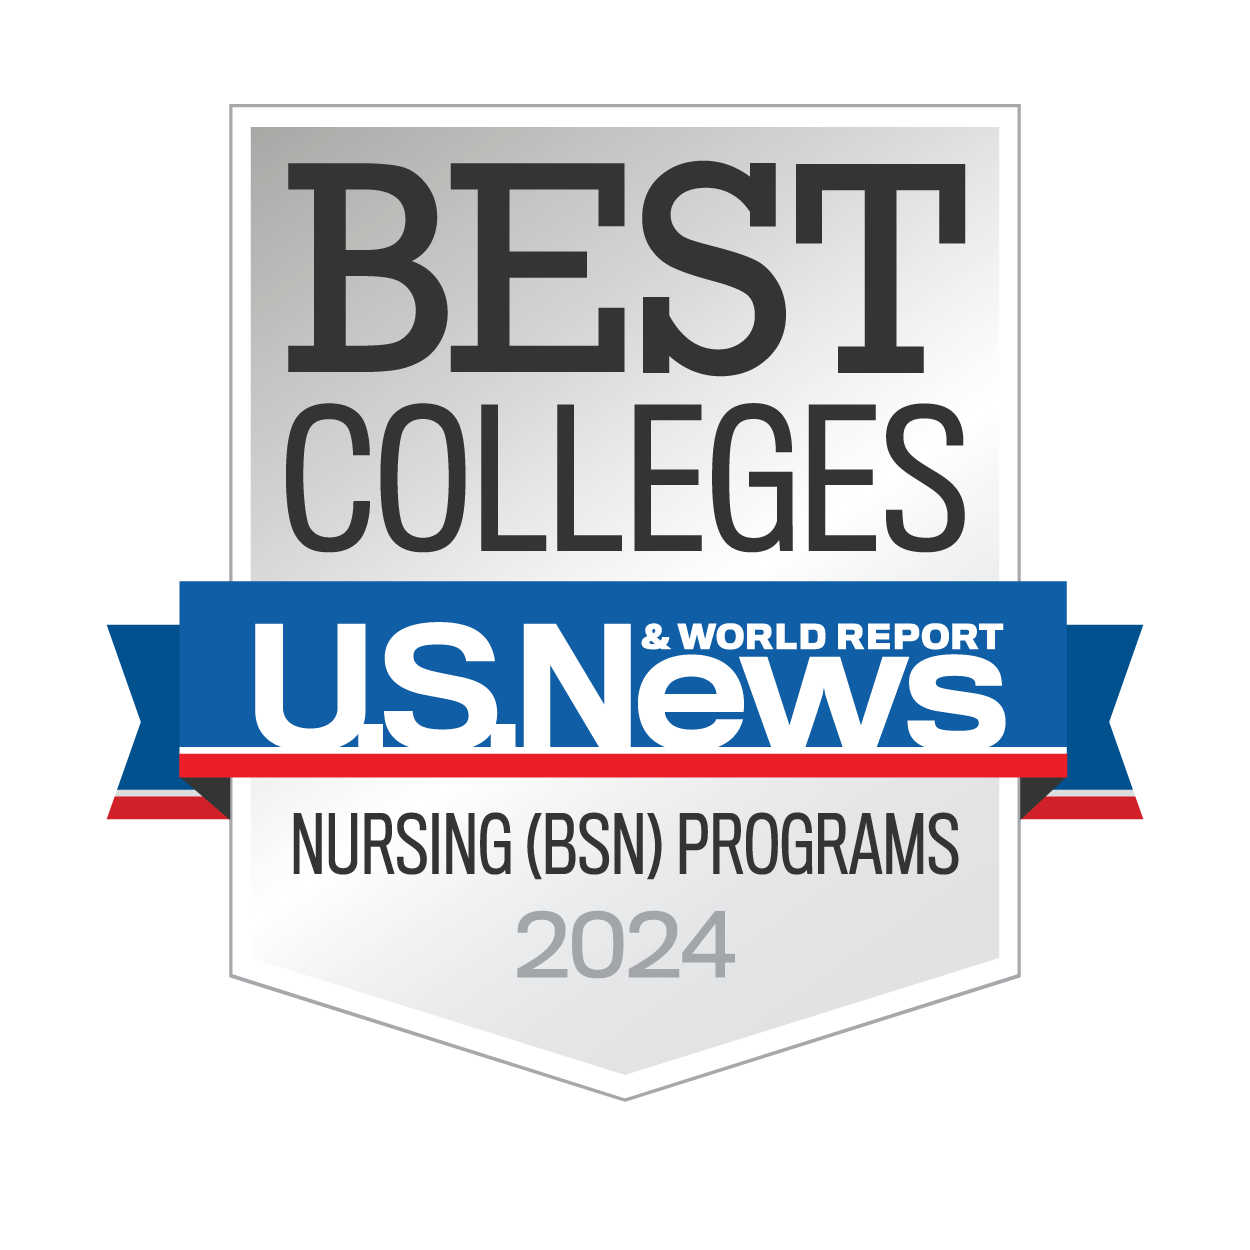 Best Colleges U.S. News and World Report - Nursing (BSN) Programs 2024